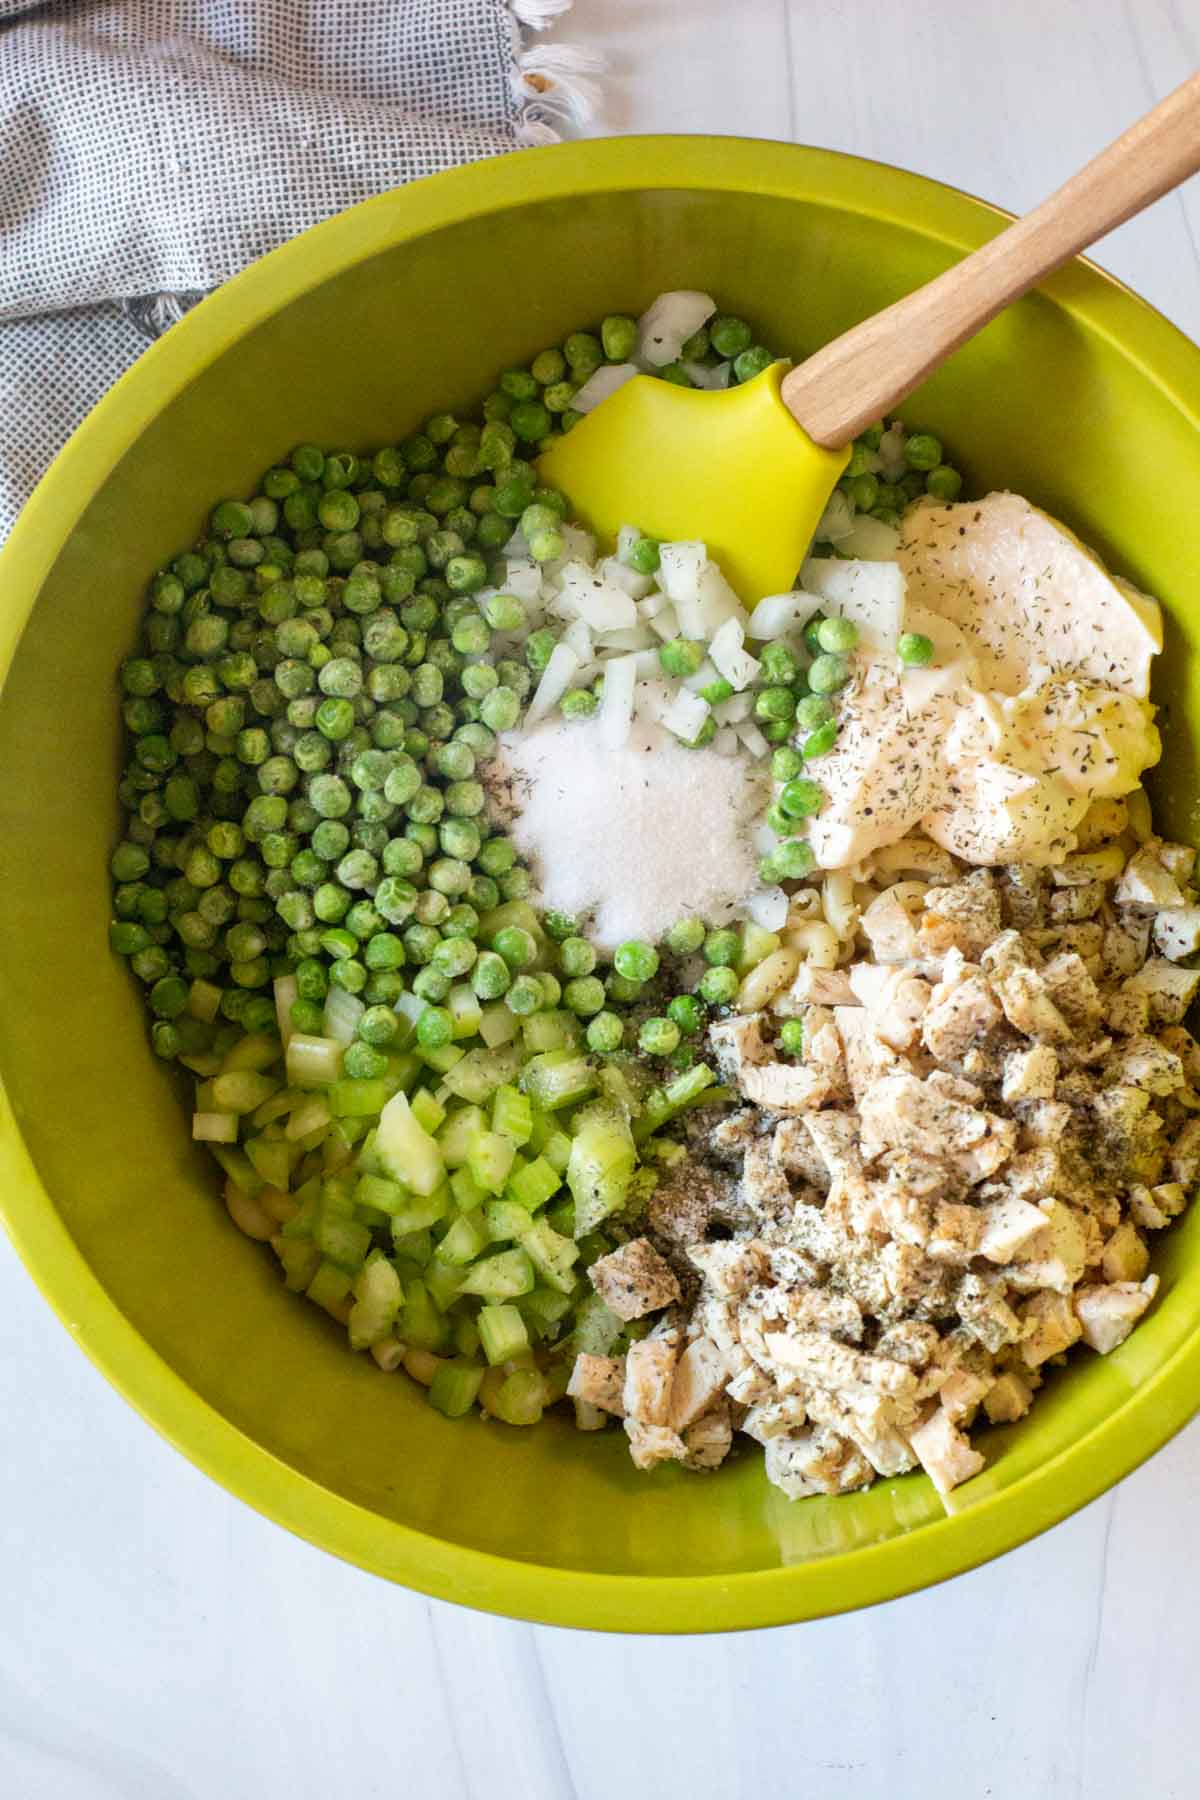 How to make chicken macaroni salad.